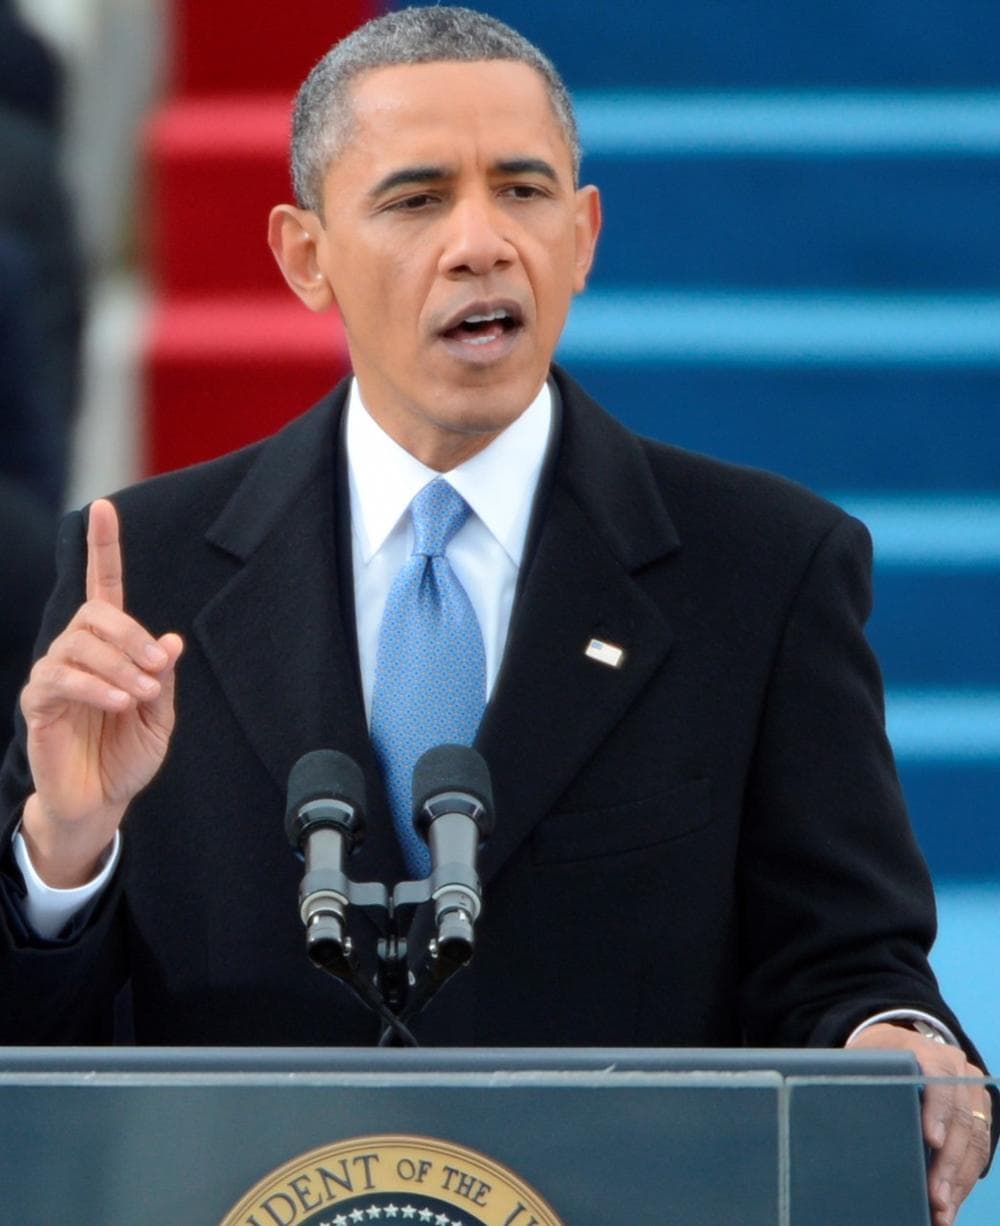 President Obama delivering his inaugural address on Jan. 21. (AP)